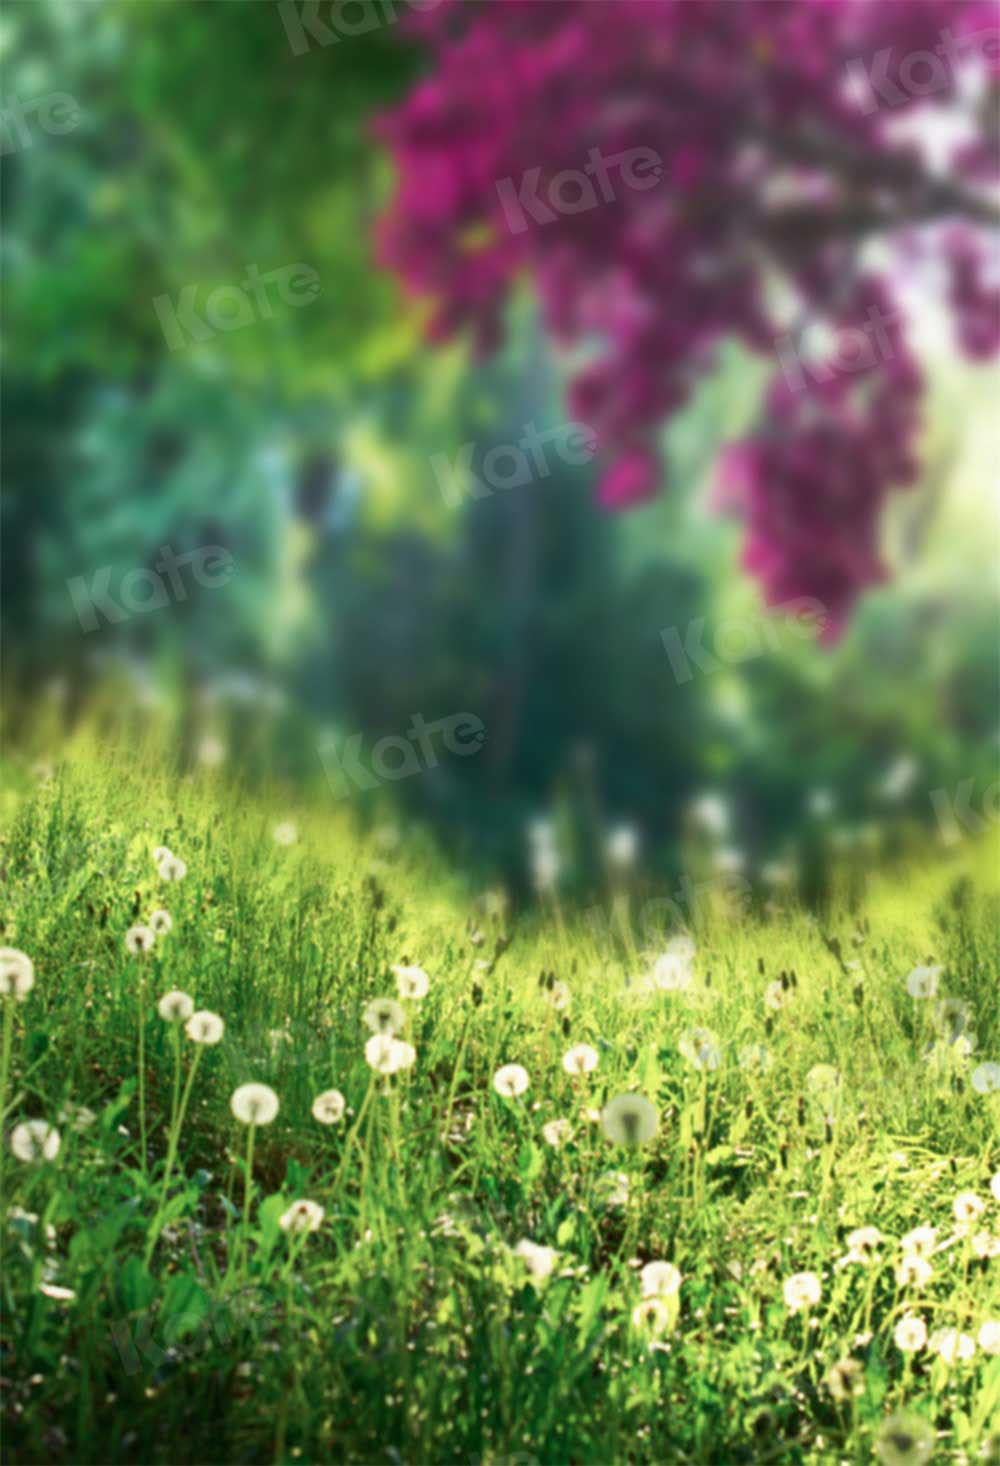 Kate Spring Grassland Backdrop Flower Tree for Photography